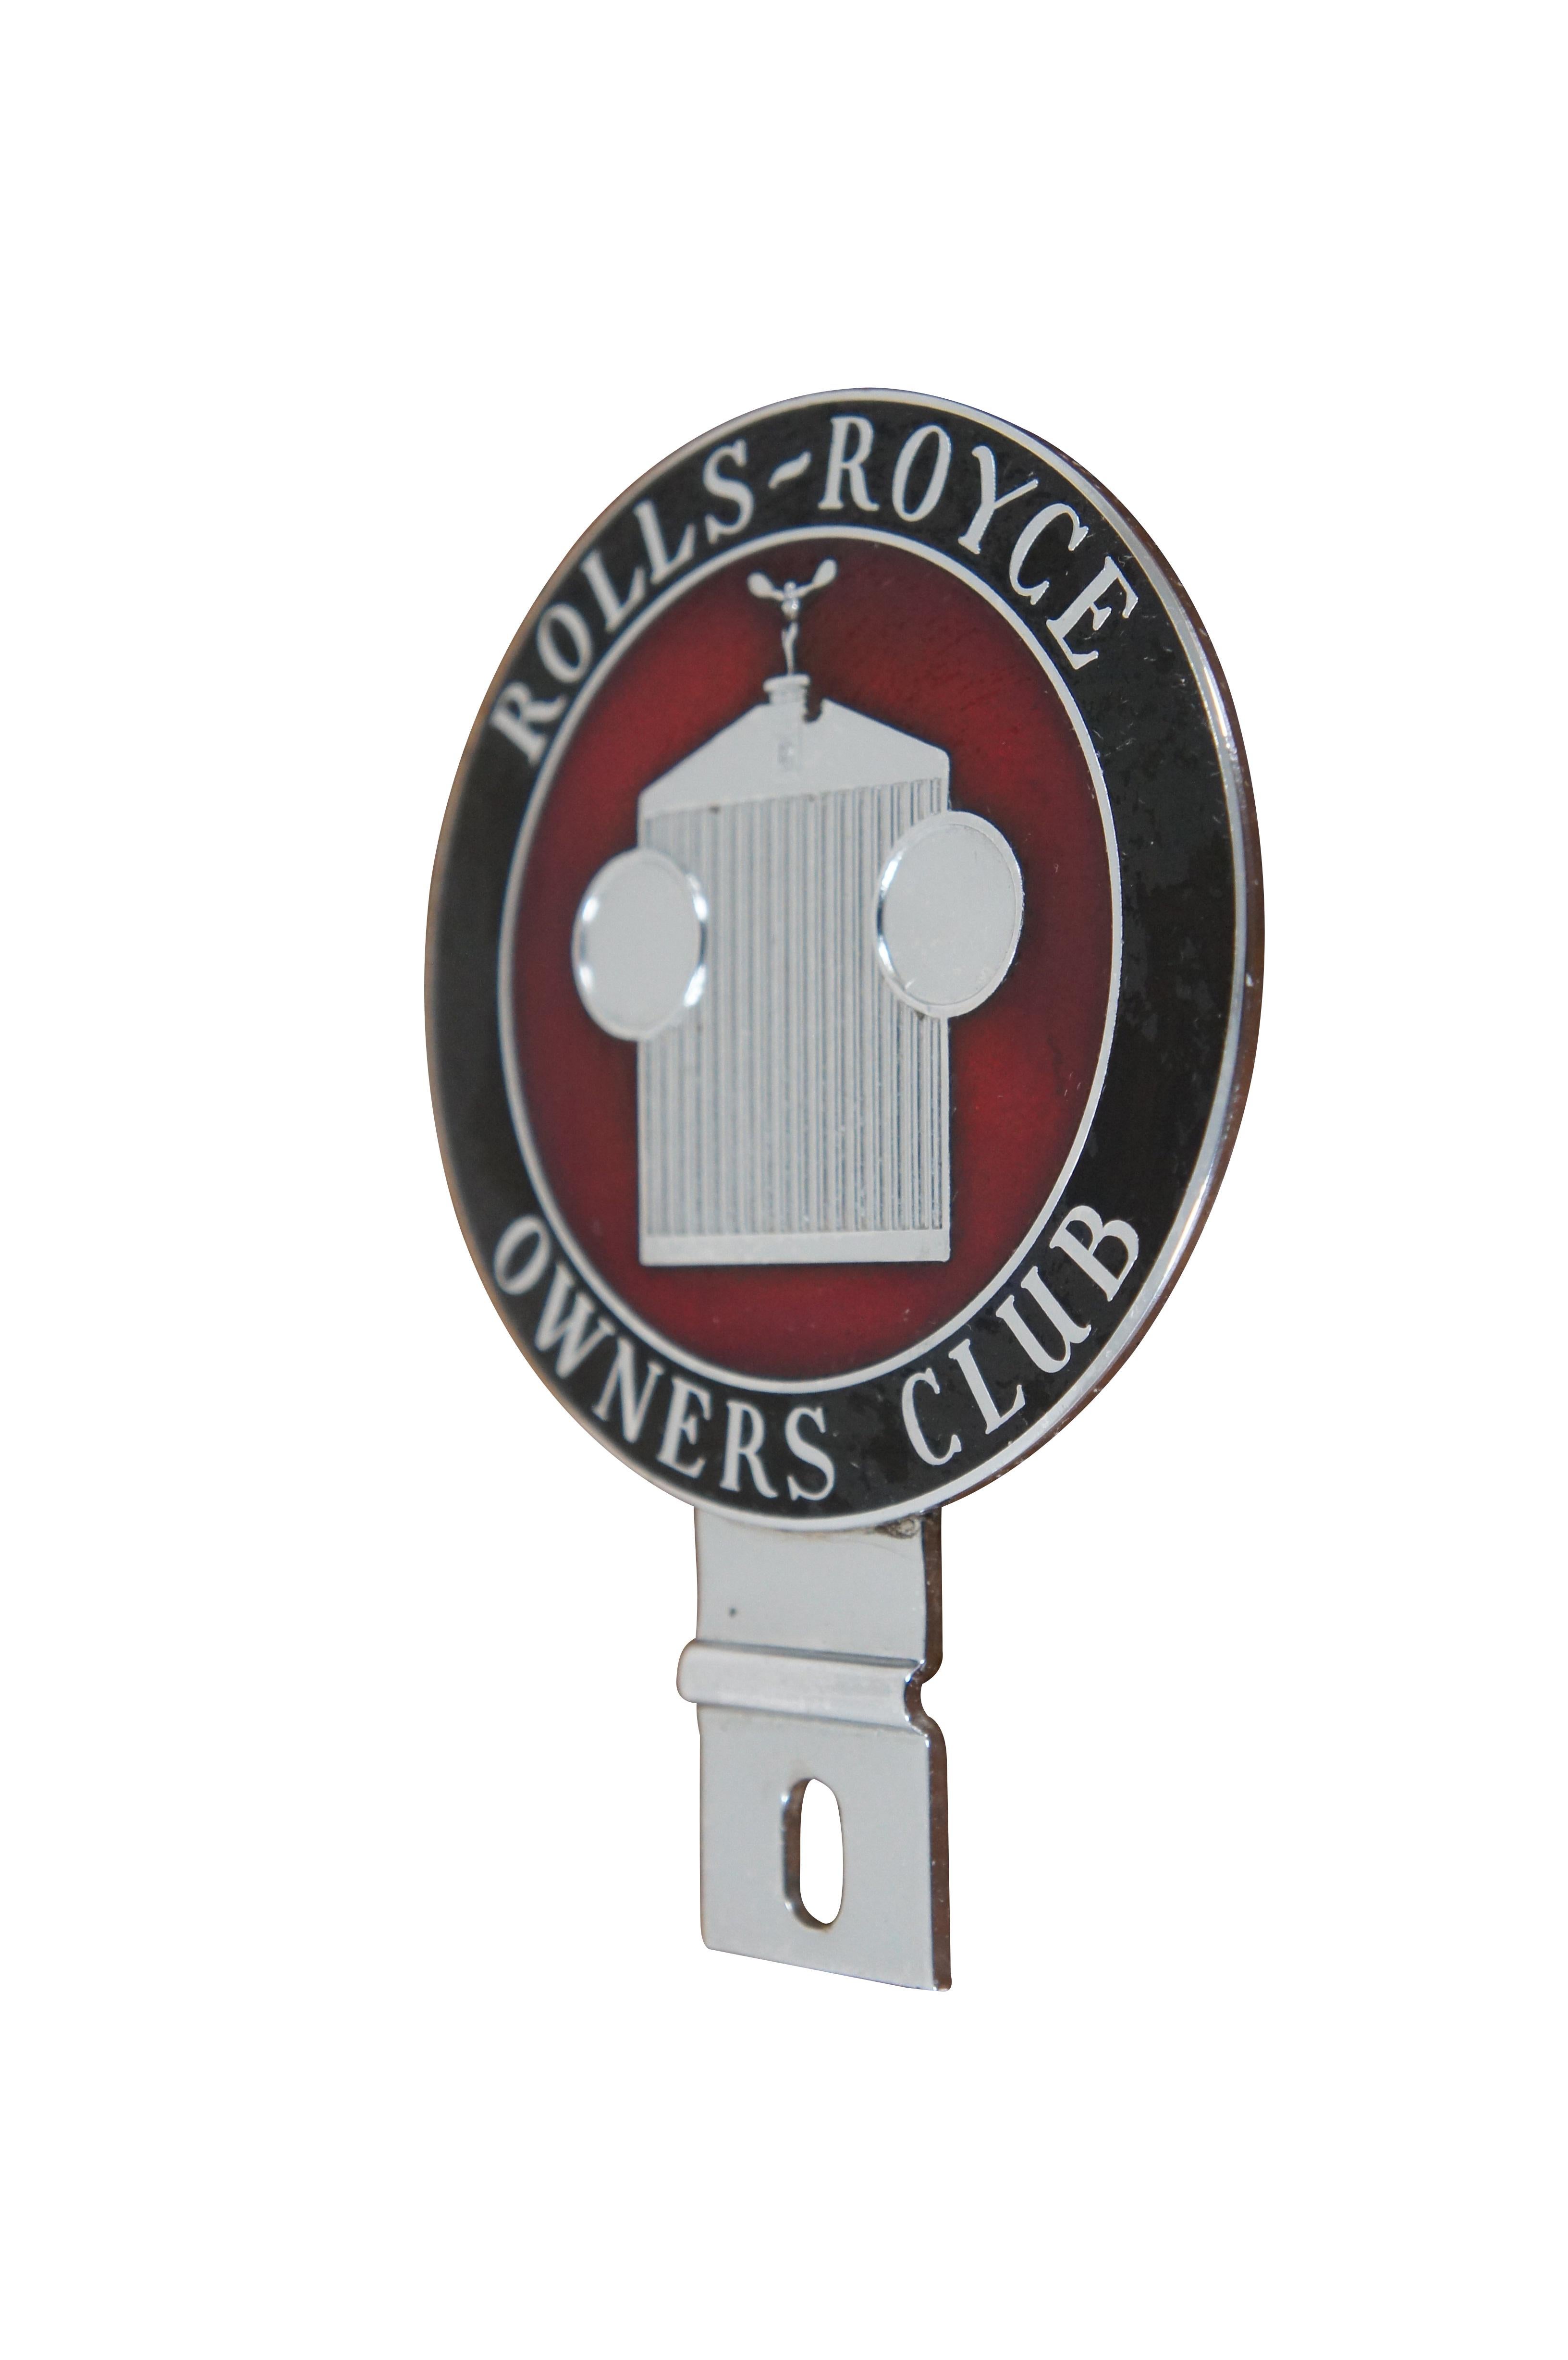 Circa mid 20th century Rolls Royce Owner's Club red and black enamel car badge / auto emblem / grill ornament.

Dimensions:
4